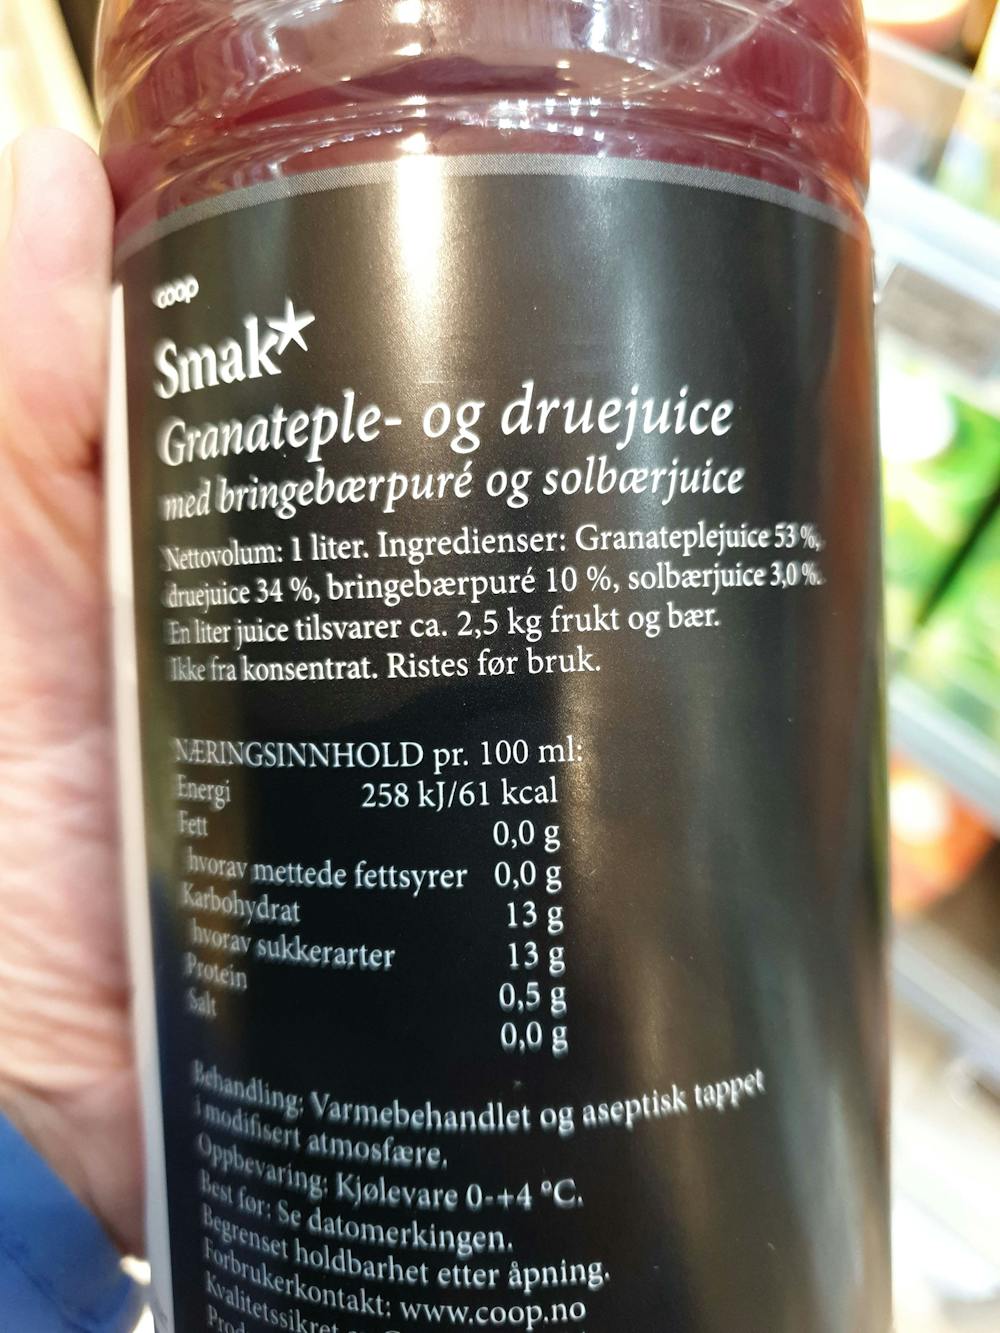 Ingrediensliste - Smak* granateple- og druejuice, Coop